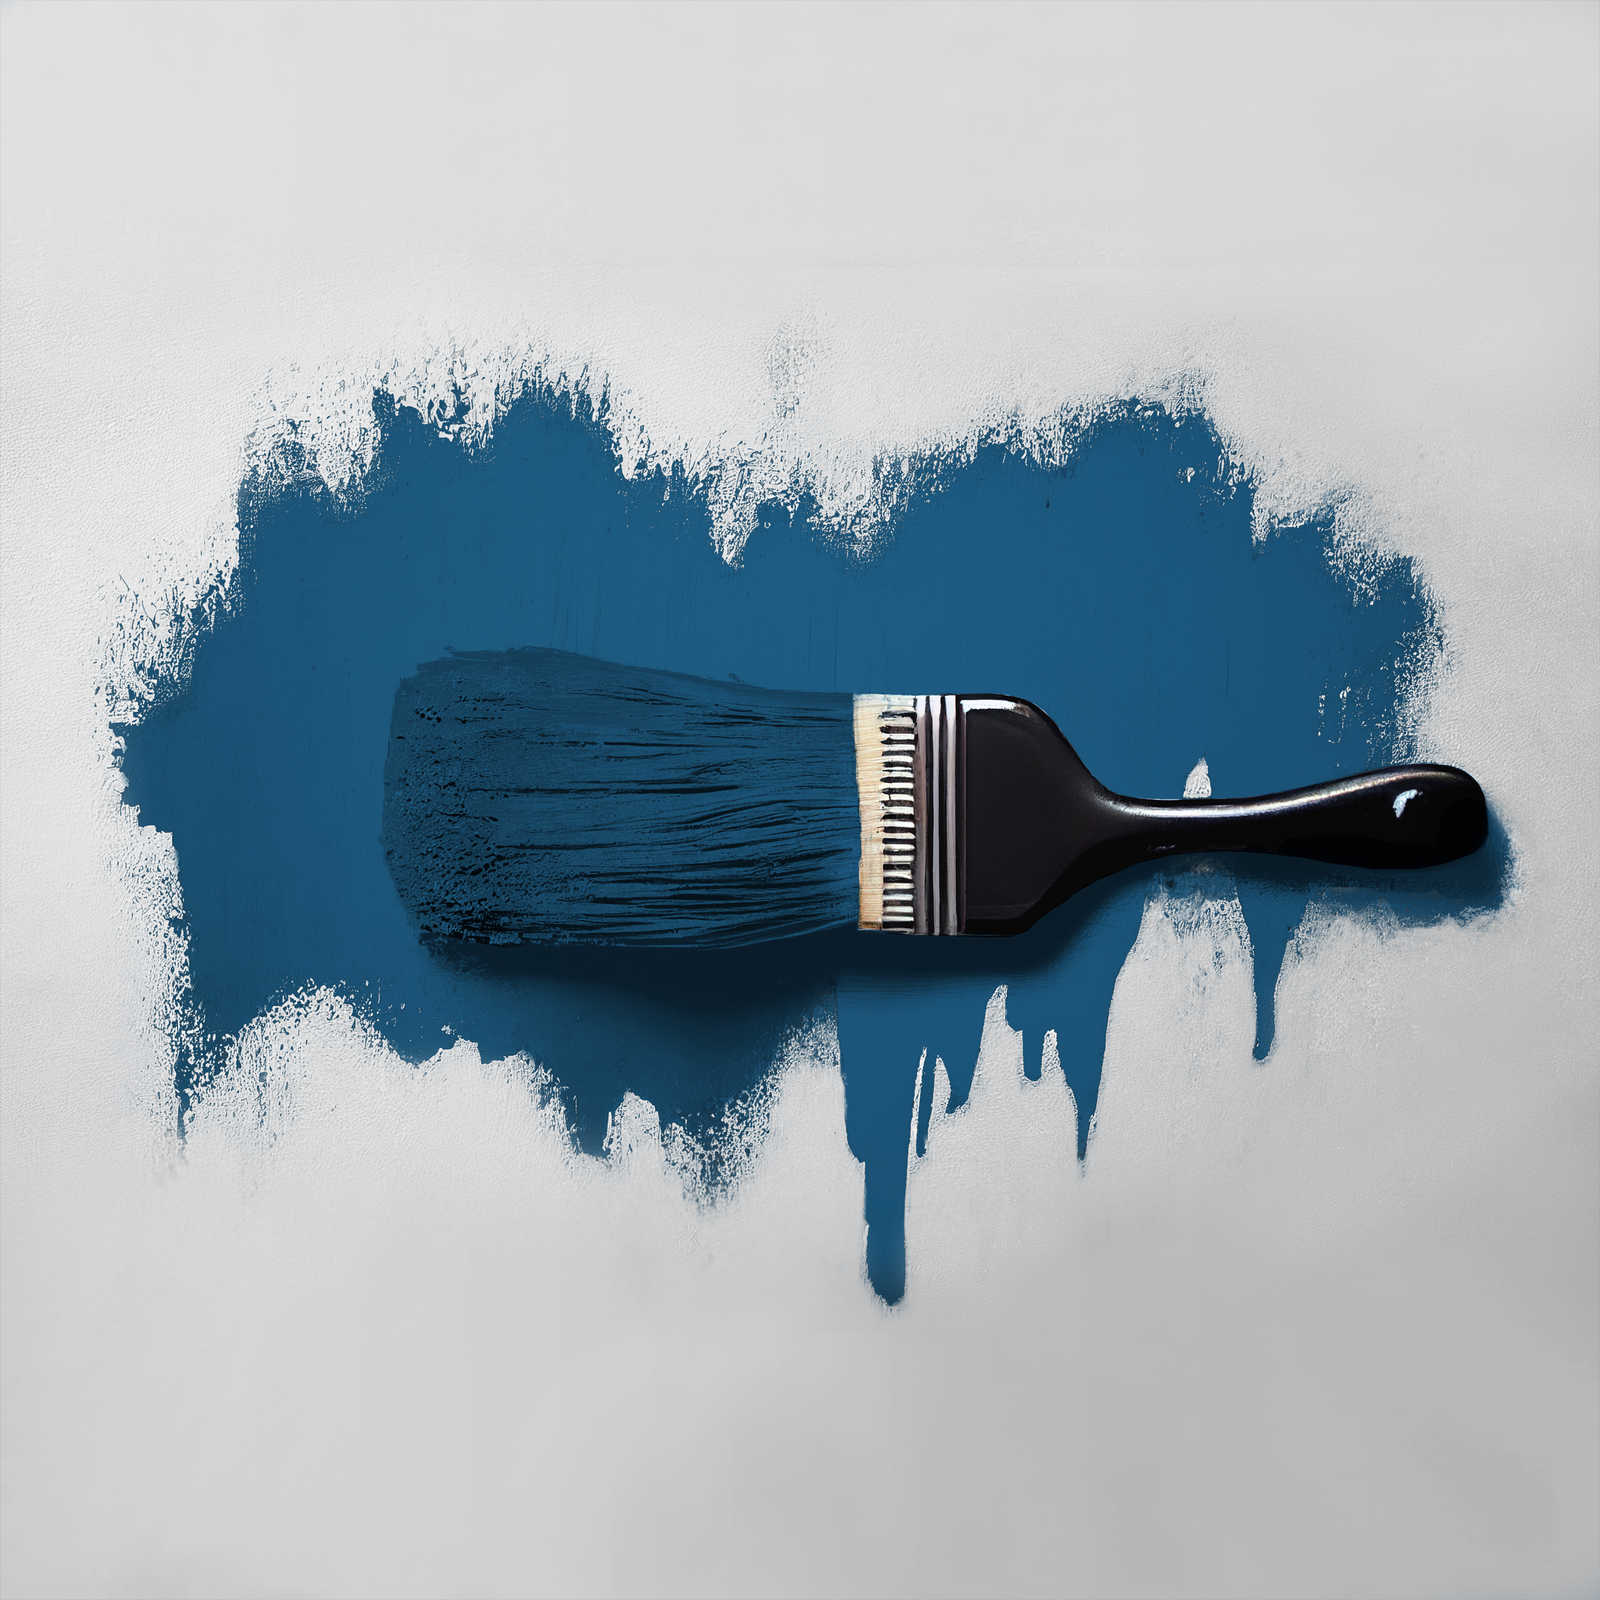             Peinture murale TCK3005 »Classic Cornflower« en bleu intense – 5,0 litres
        